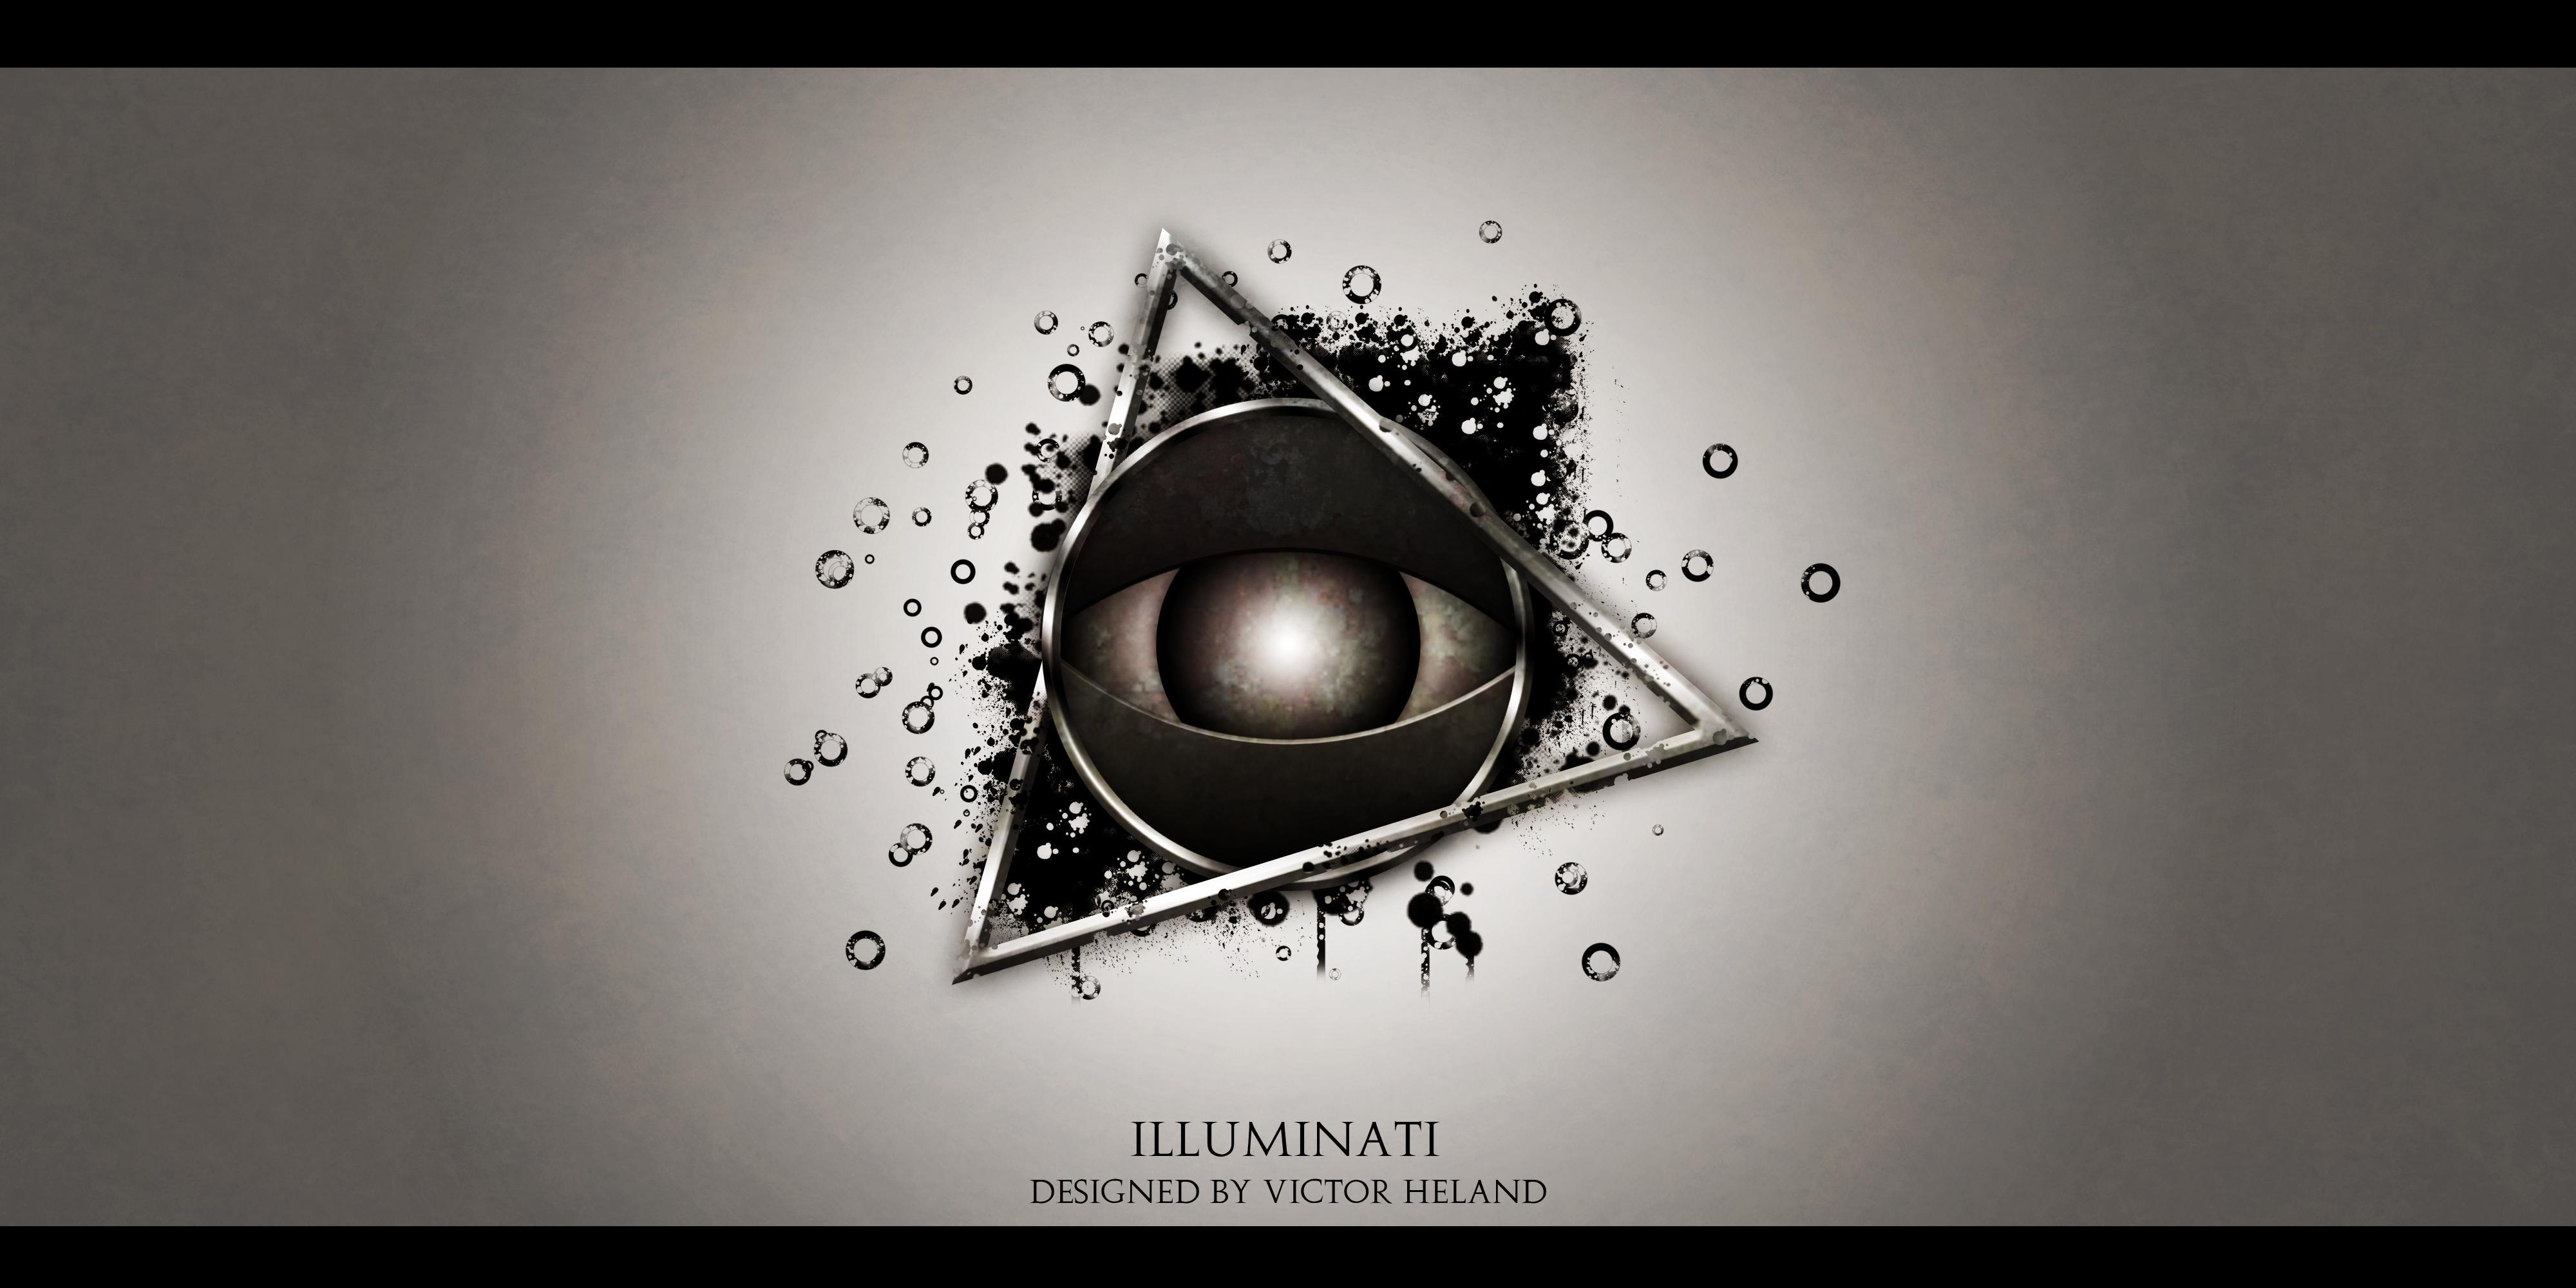 illuminati wallpaper tumblr Google